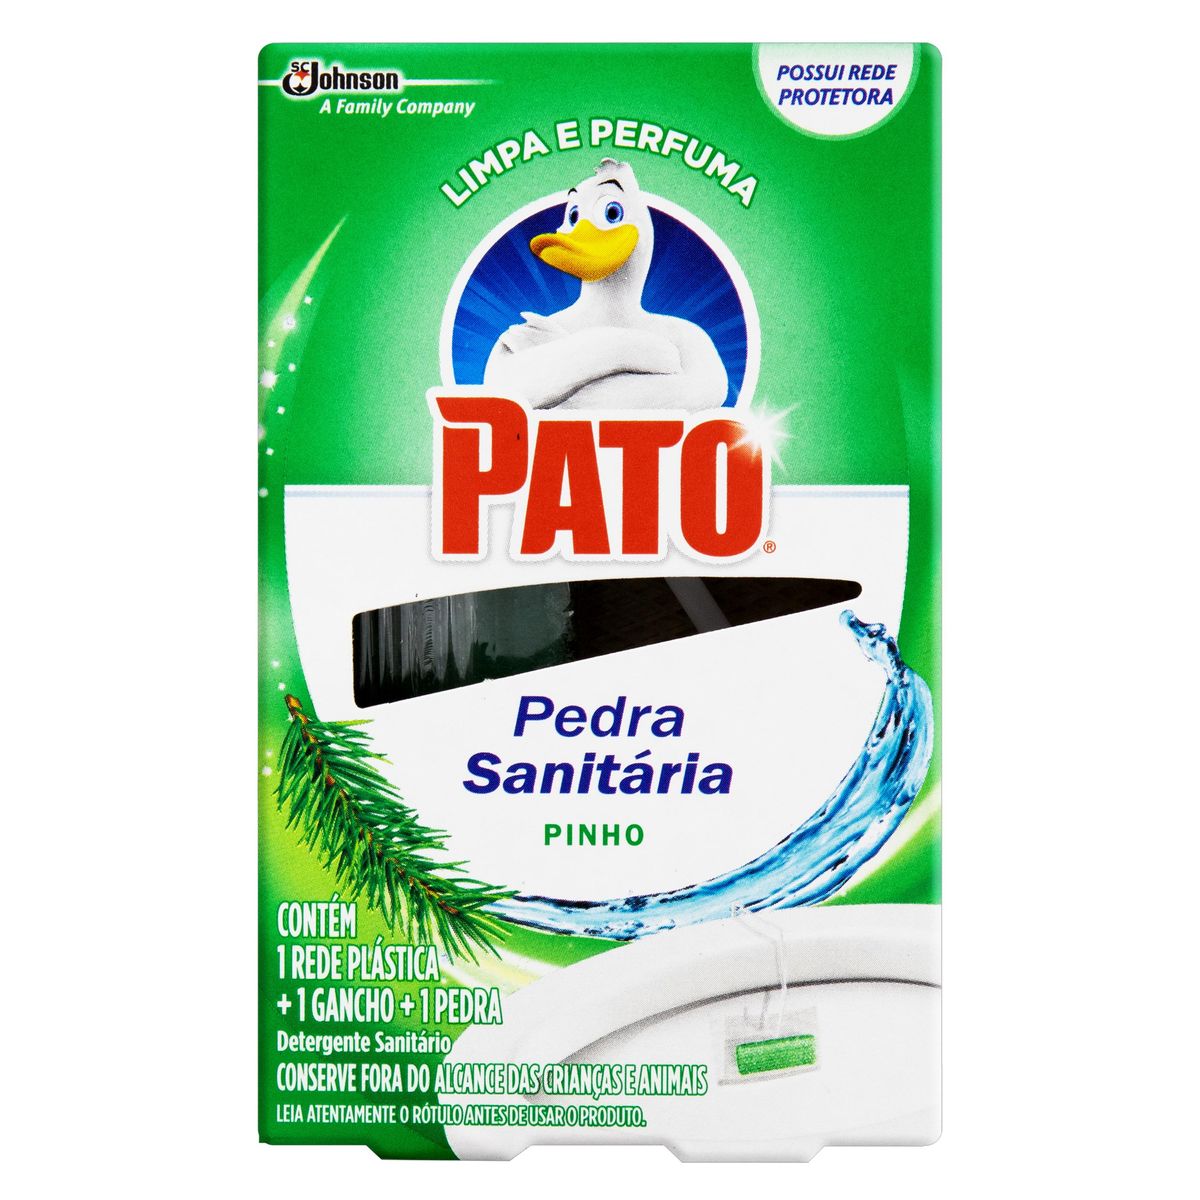 Detergente Sanitário Pato Pedra Pinho image number 0